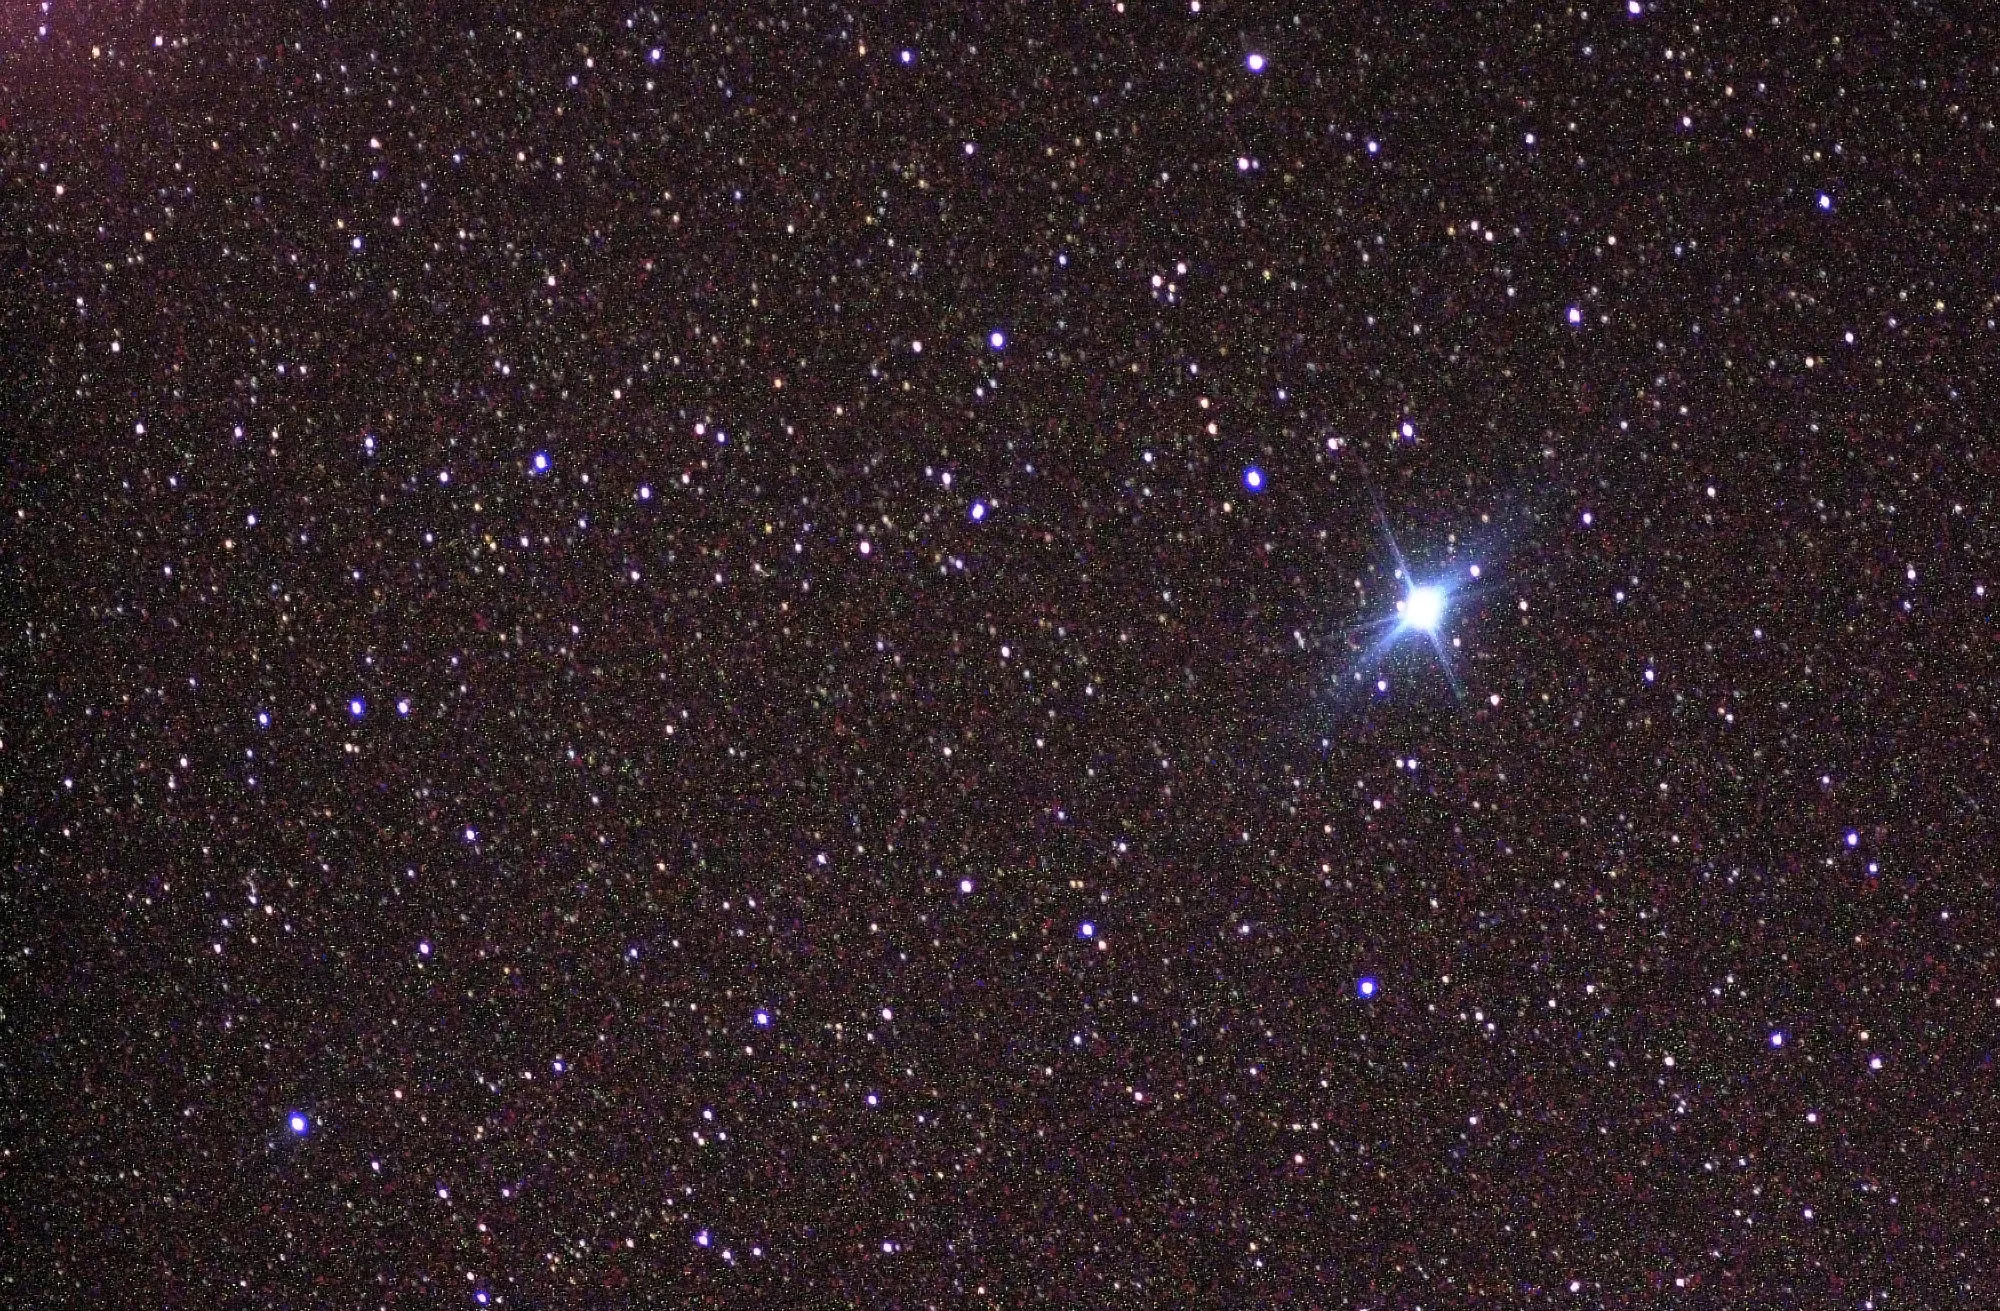 Bintang Canopus (Alpha Carinae)